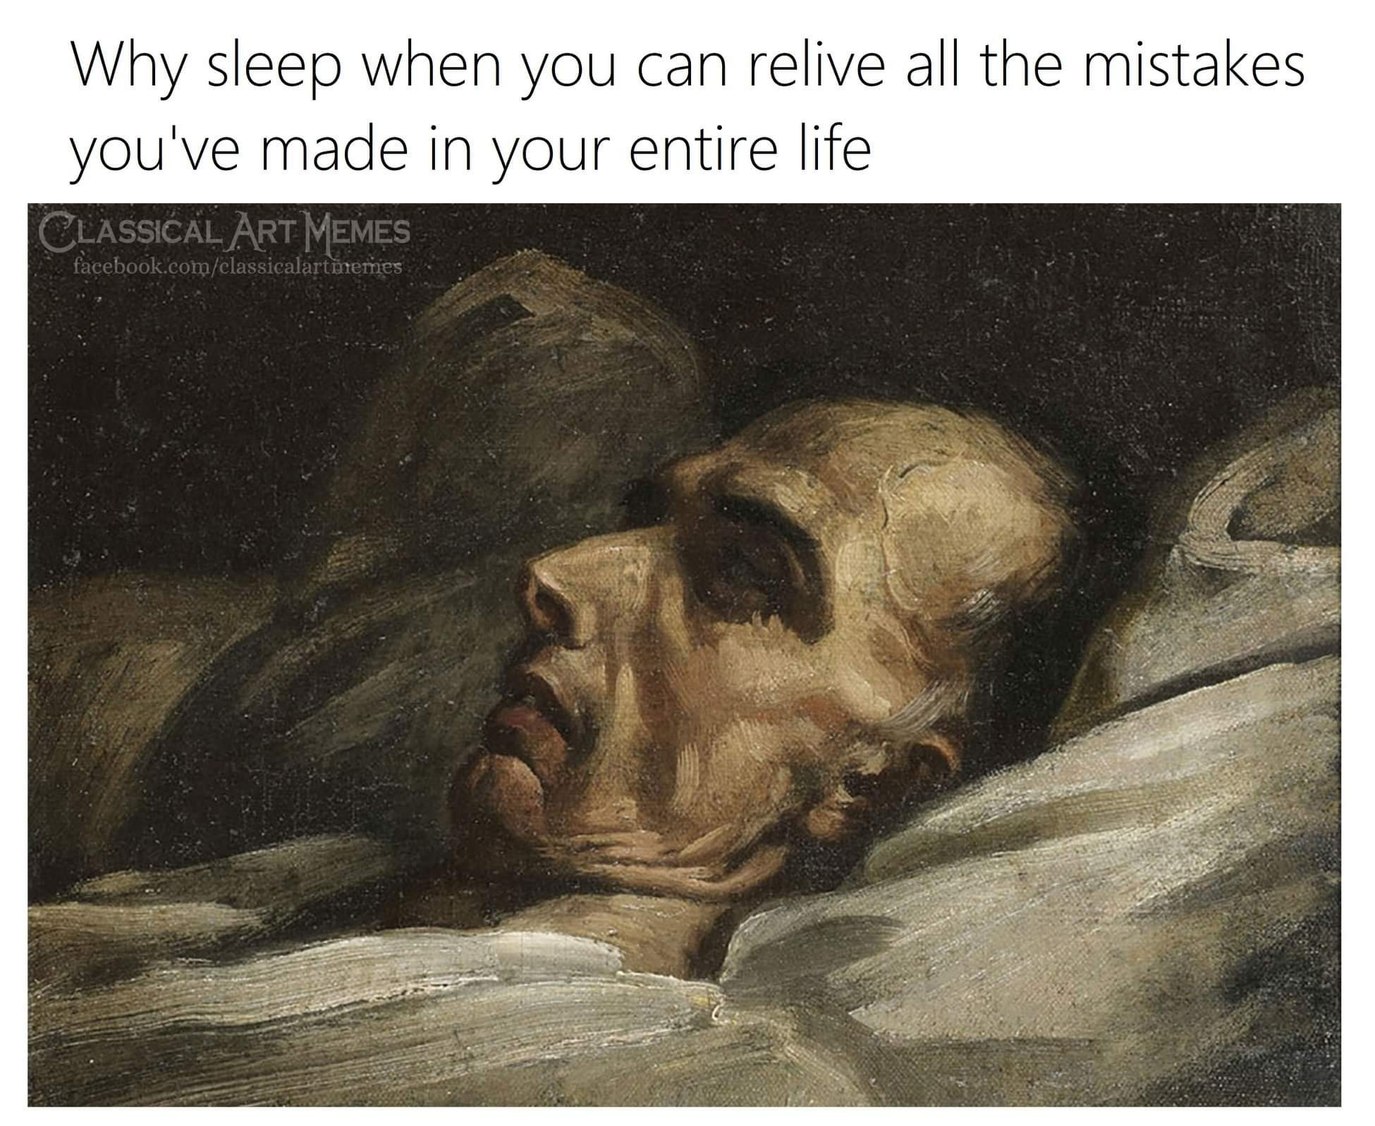 Sleeping is overrated - meme